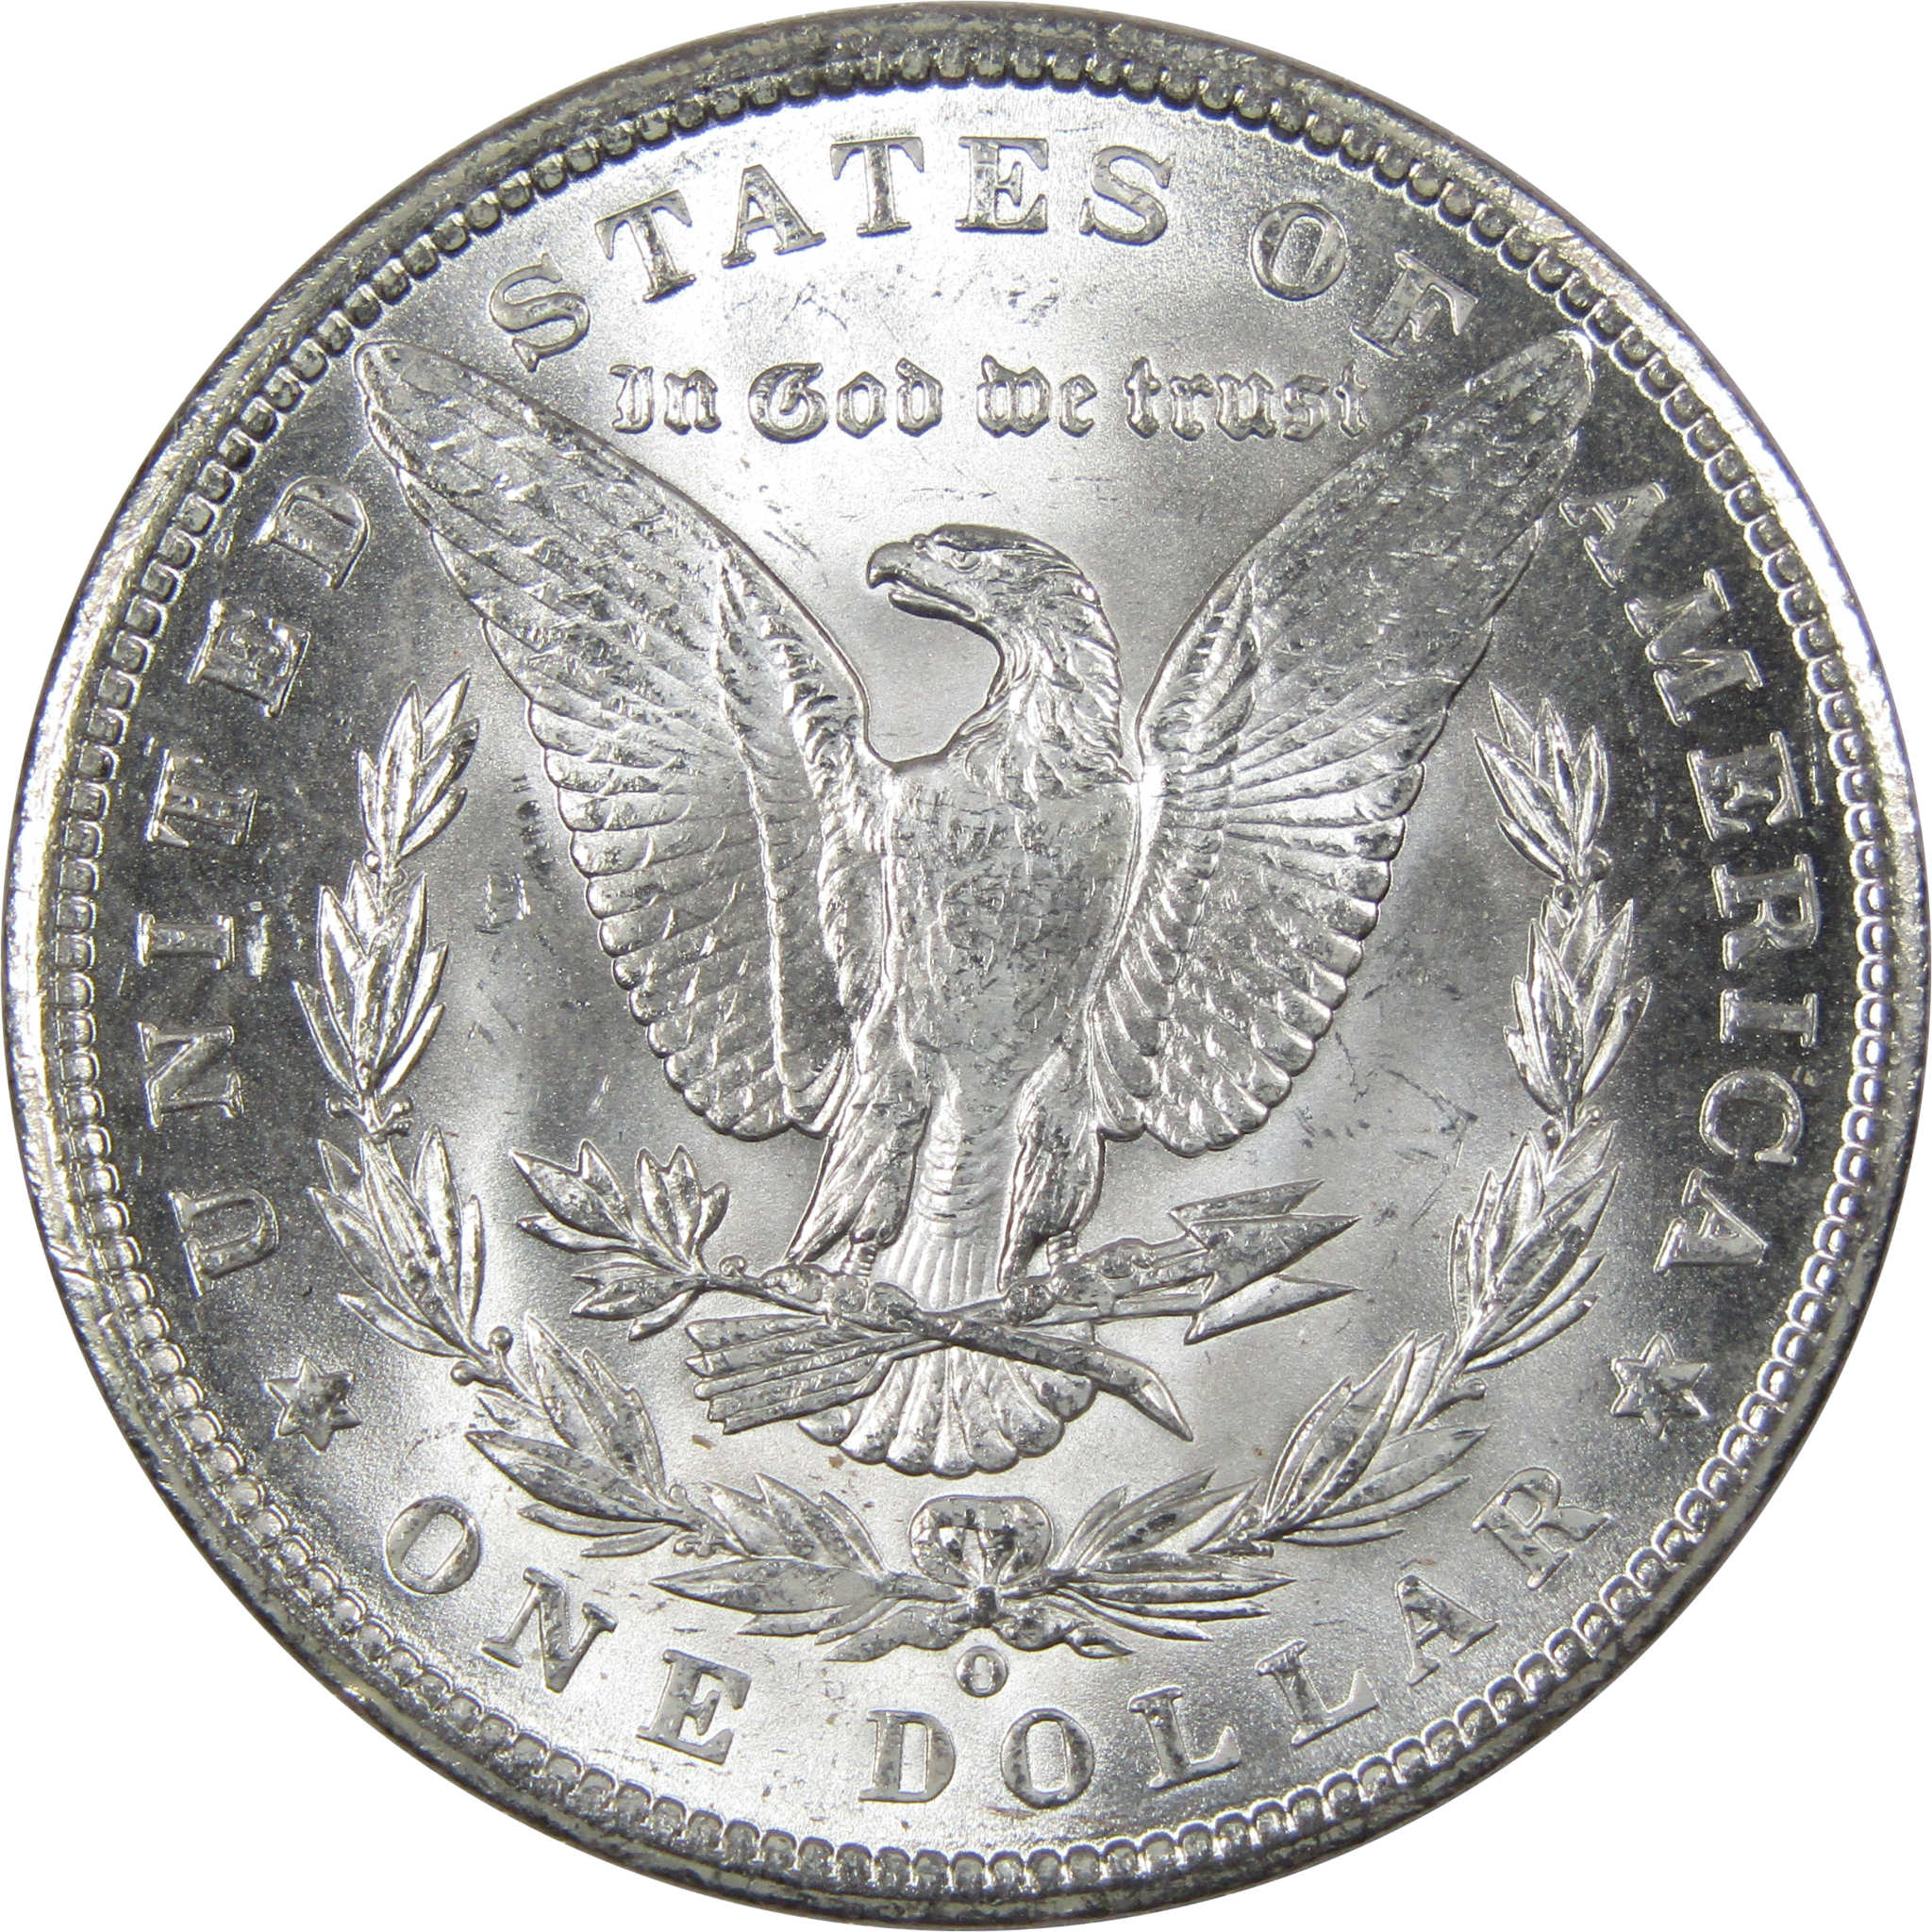 1900 O Morgan Dollar BU Uncirculated Mint State 90% Silver SKU:IPC9755 - Morgan coin - Morgan silver dollar - Morgan silver dollar for sale - Profile Coins &amp; Collectibles